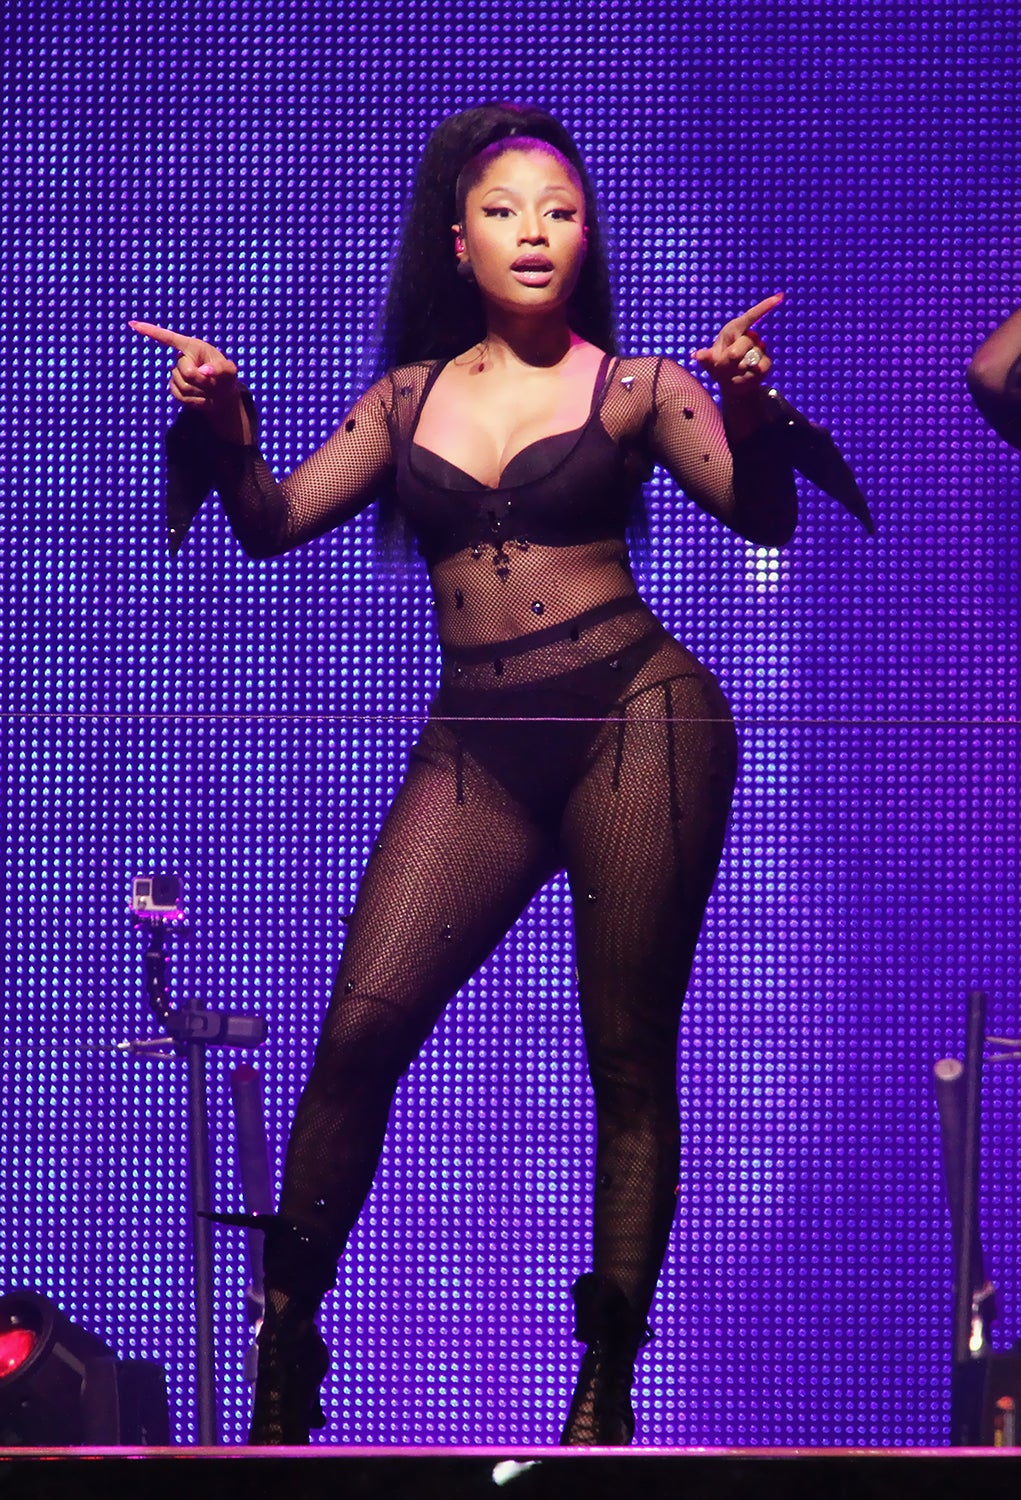 Nicki Minaj to Open 2015 Video Music Awards
